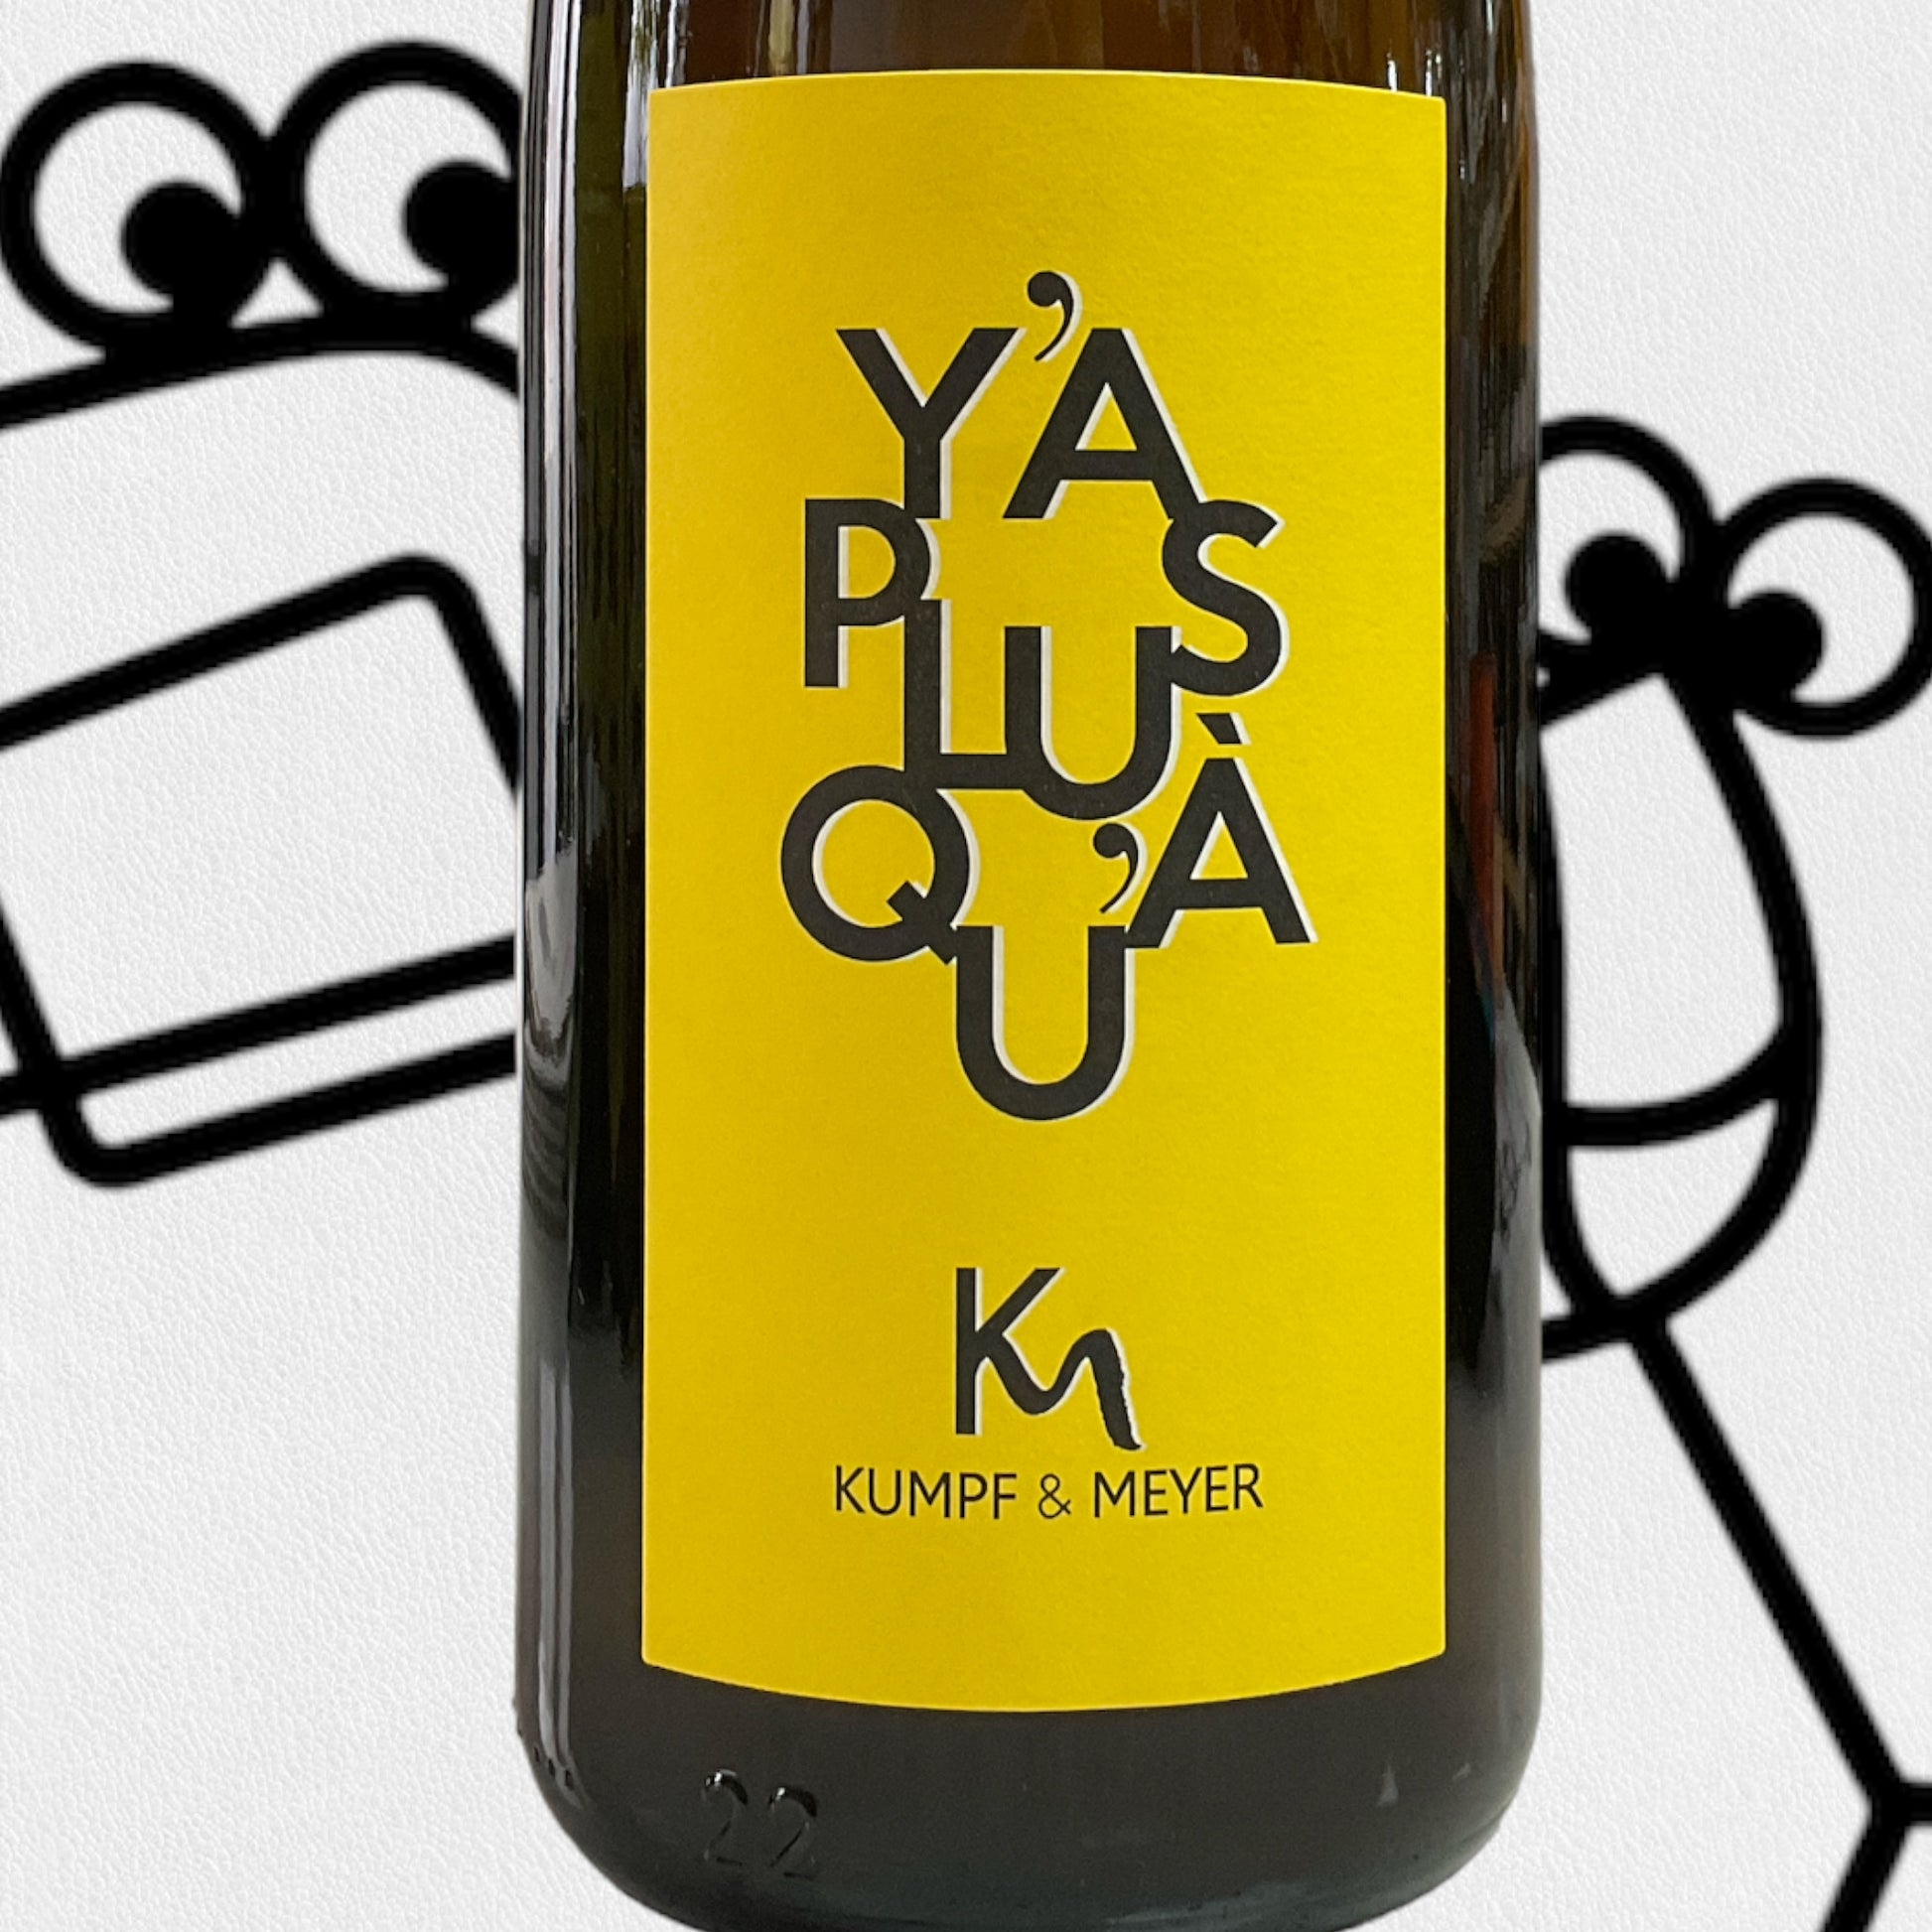 Kumpf & Meyer 'Y'a Plus Qu'a' 2020 Alsace, France - Williston Park Wines & Spirits